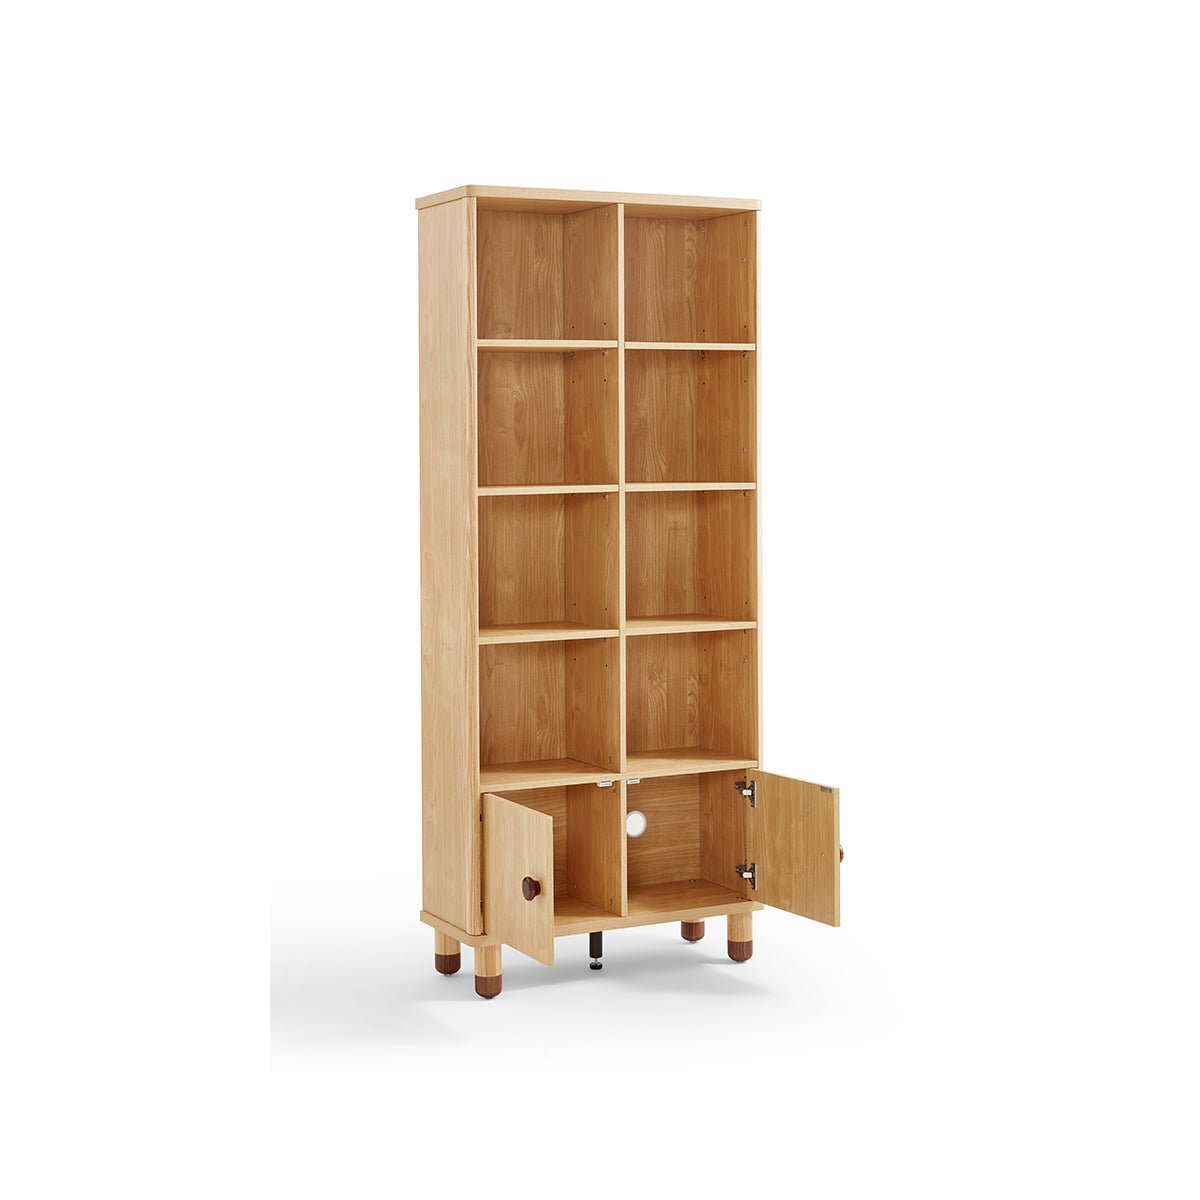 Dear Bear 10 Grid Kids Oak Storage Bookshelf - 0cm